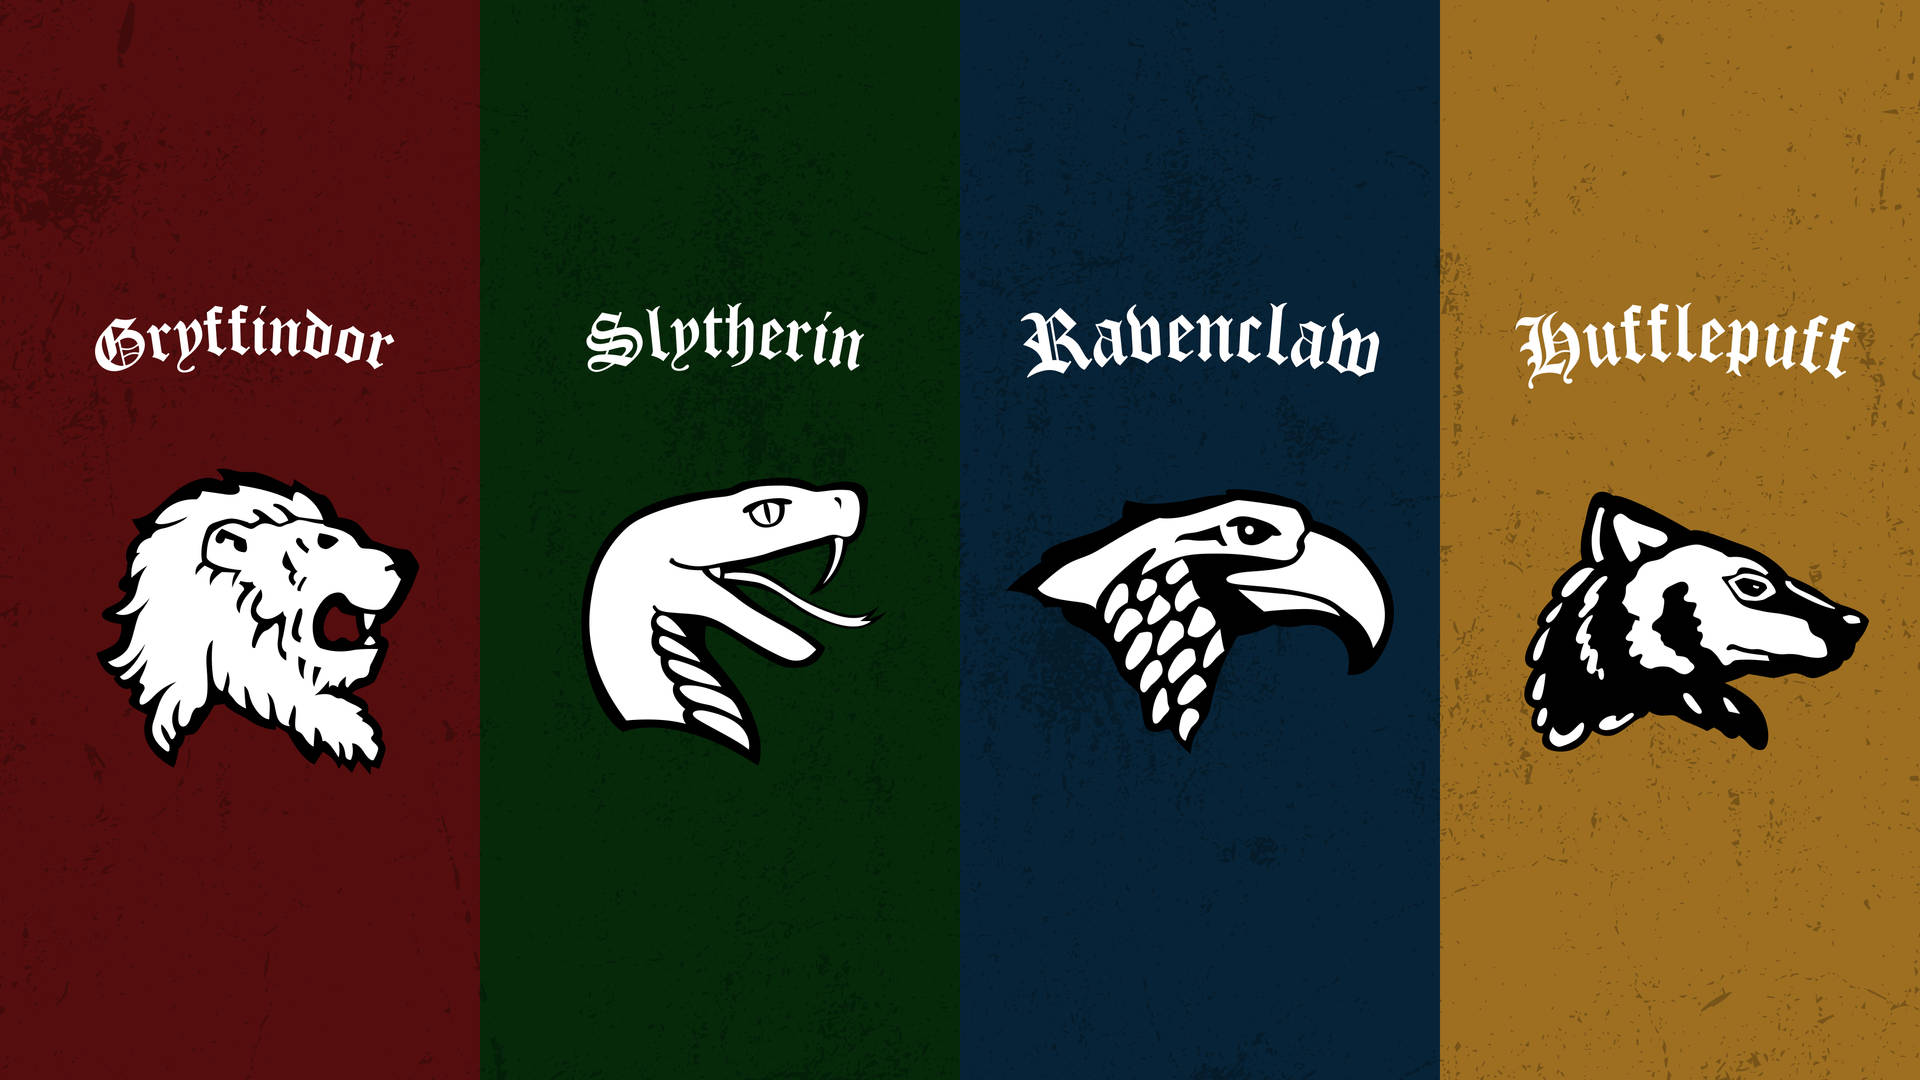 Four Houses Of Hogwarts Aesthetic Background